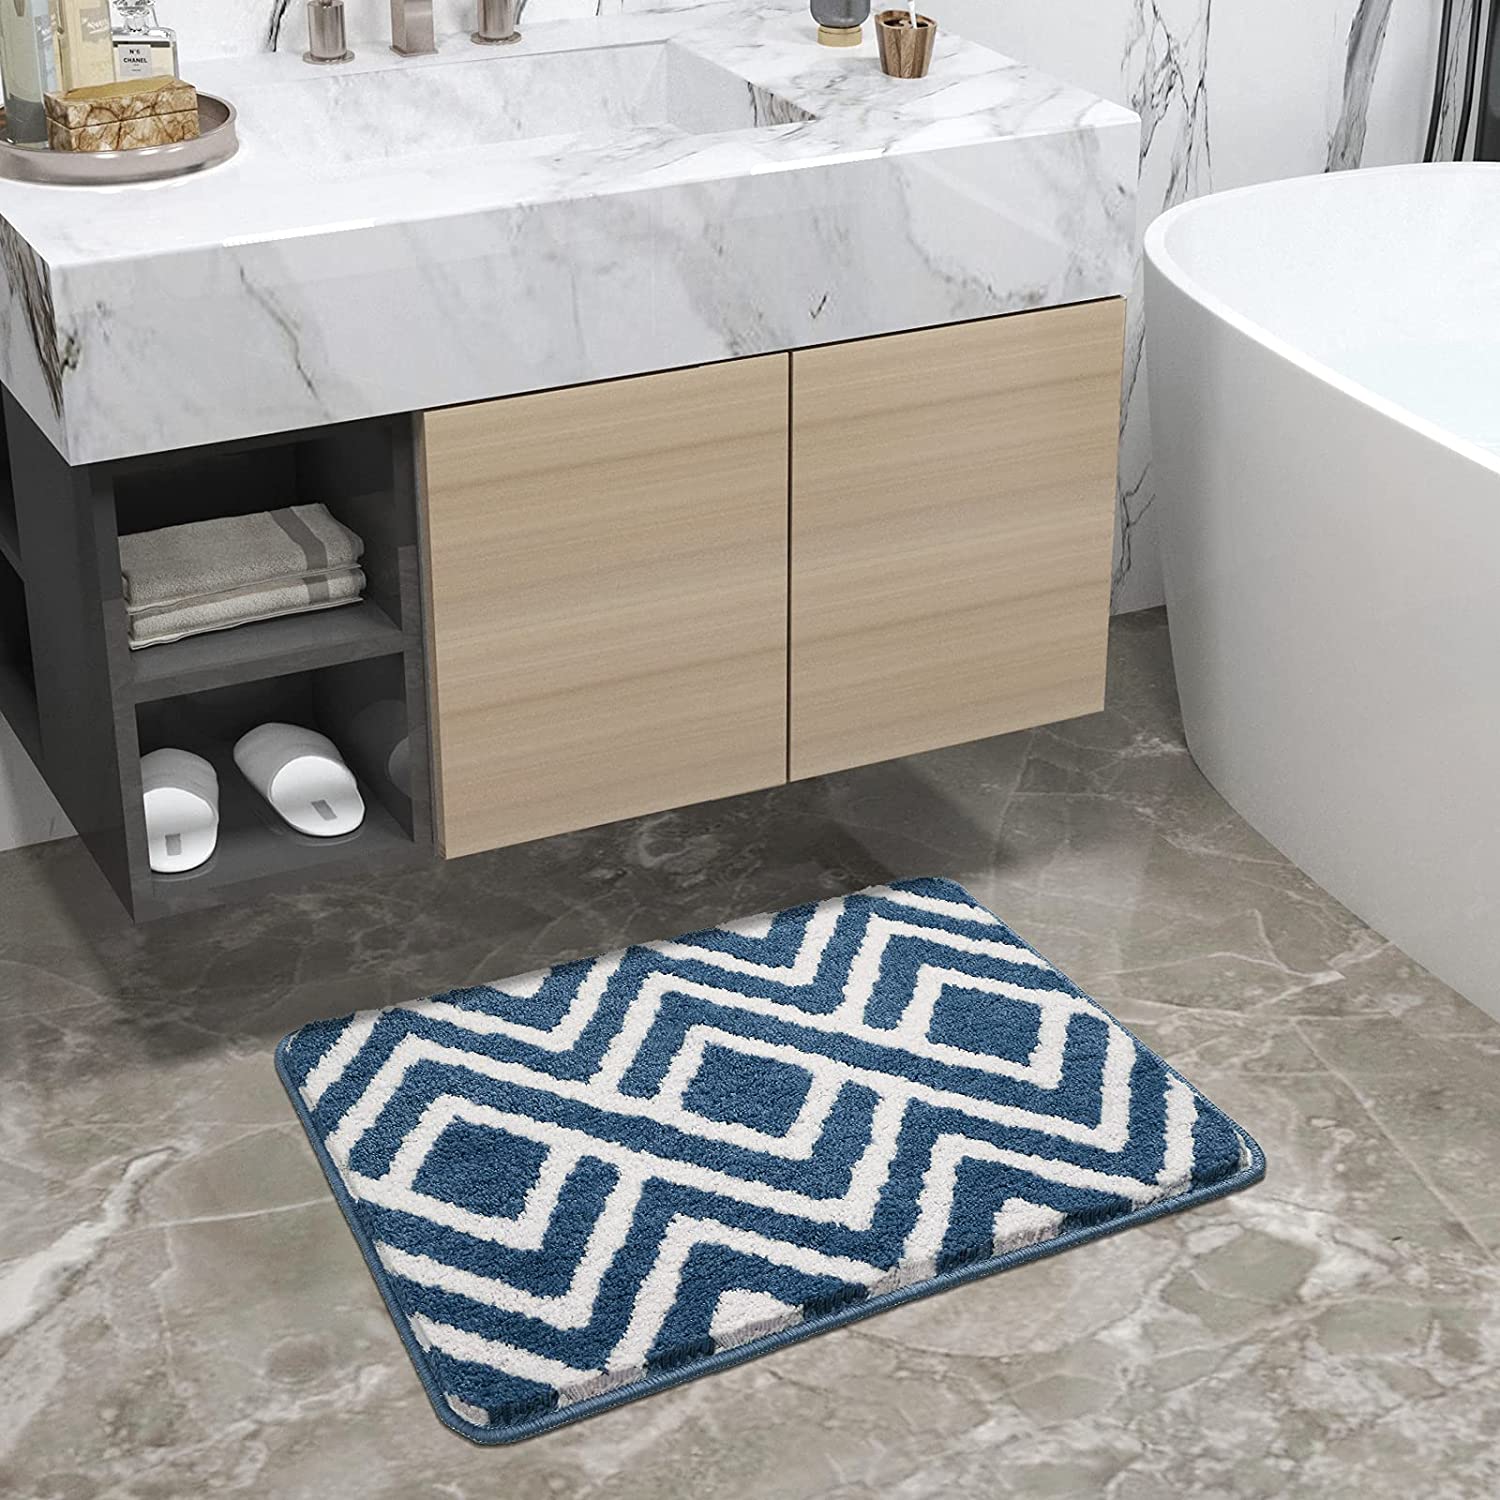 DEXI Bathroom Rugs Bath Mats,Quick Dry and Non Slip Bath Mat for